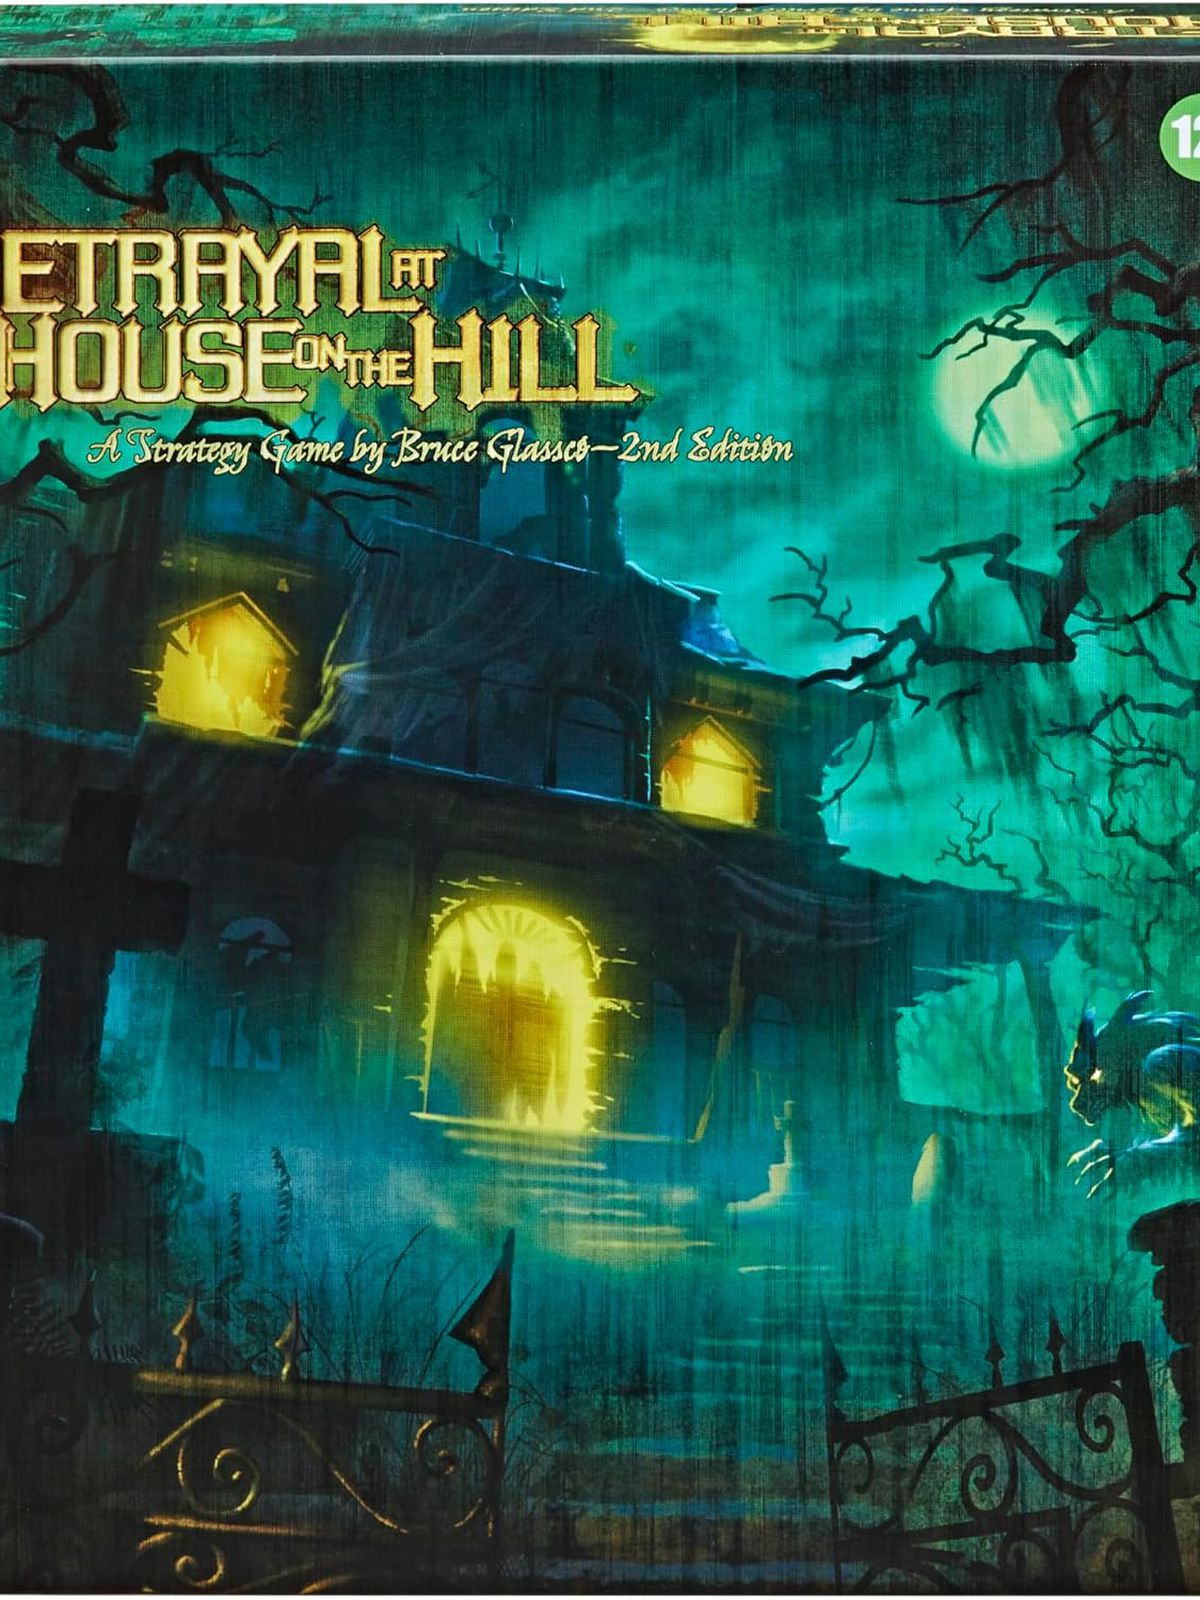 La boîte du jeu de société Betrayal at House on the Hill